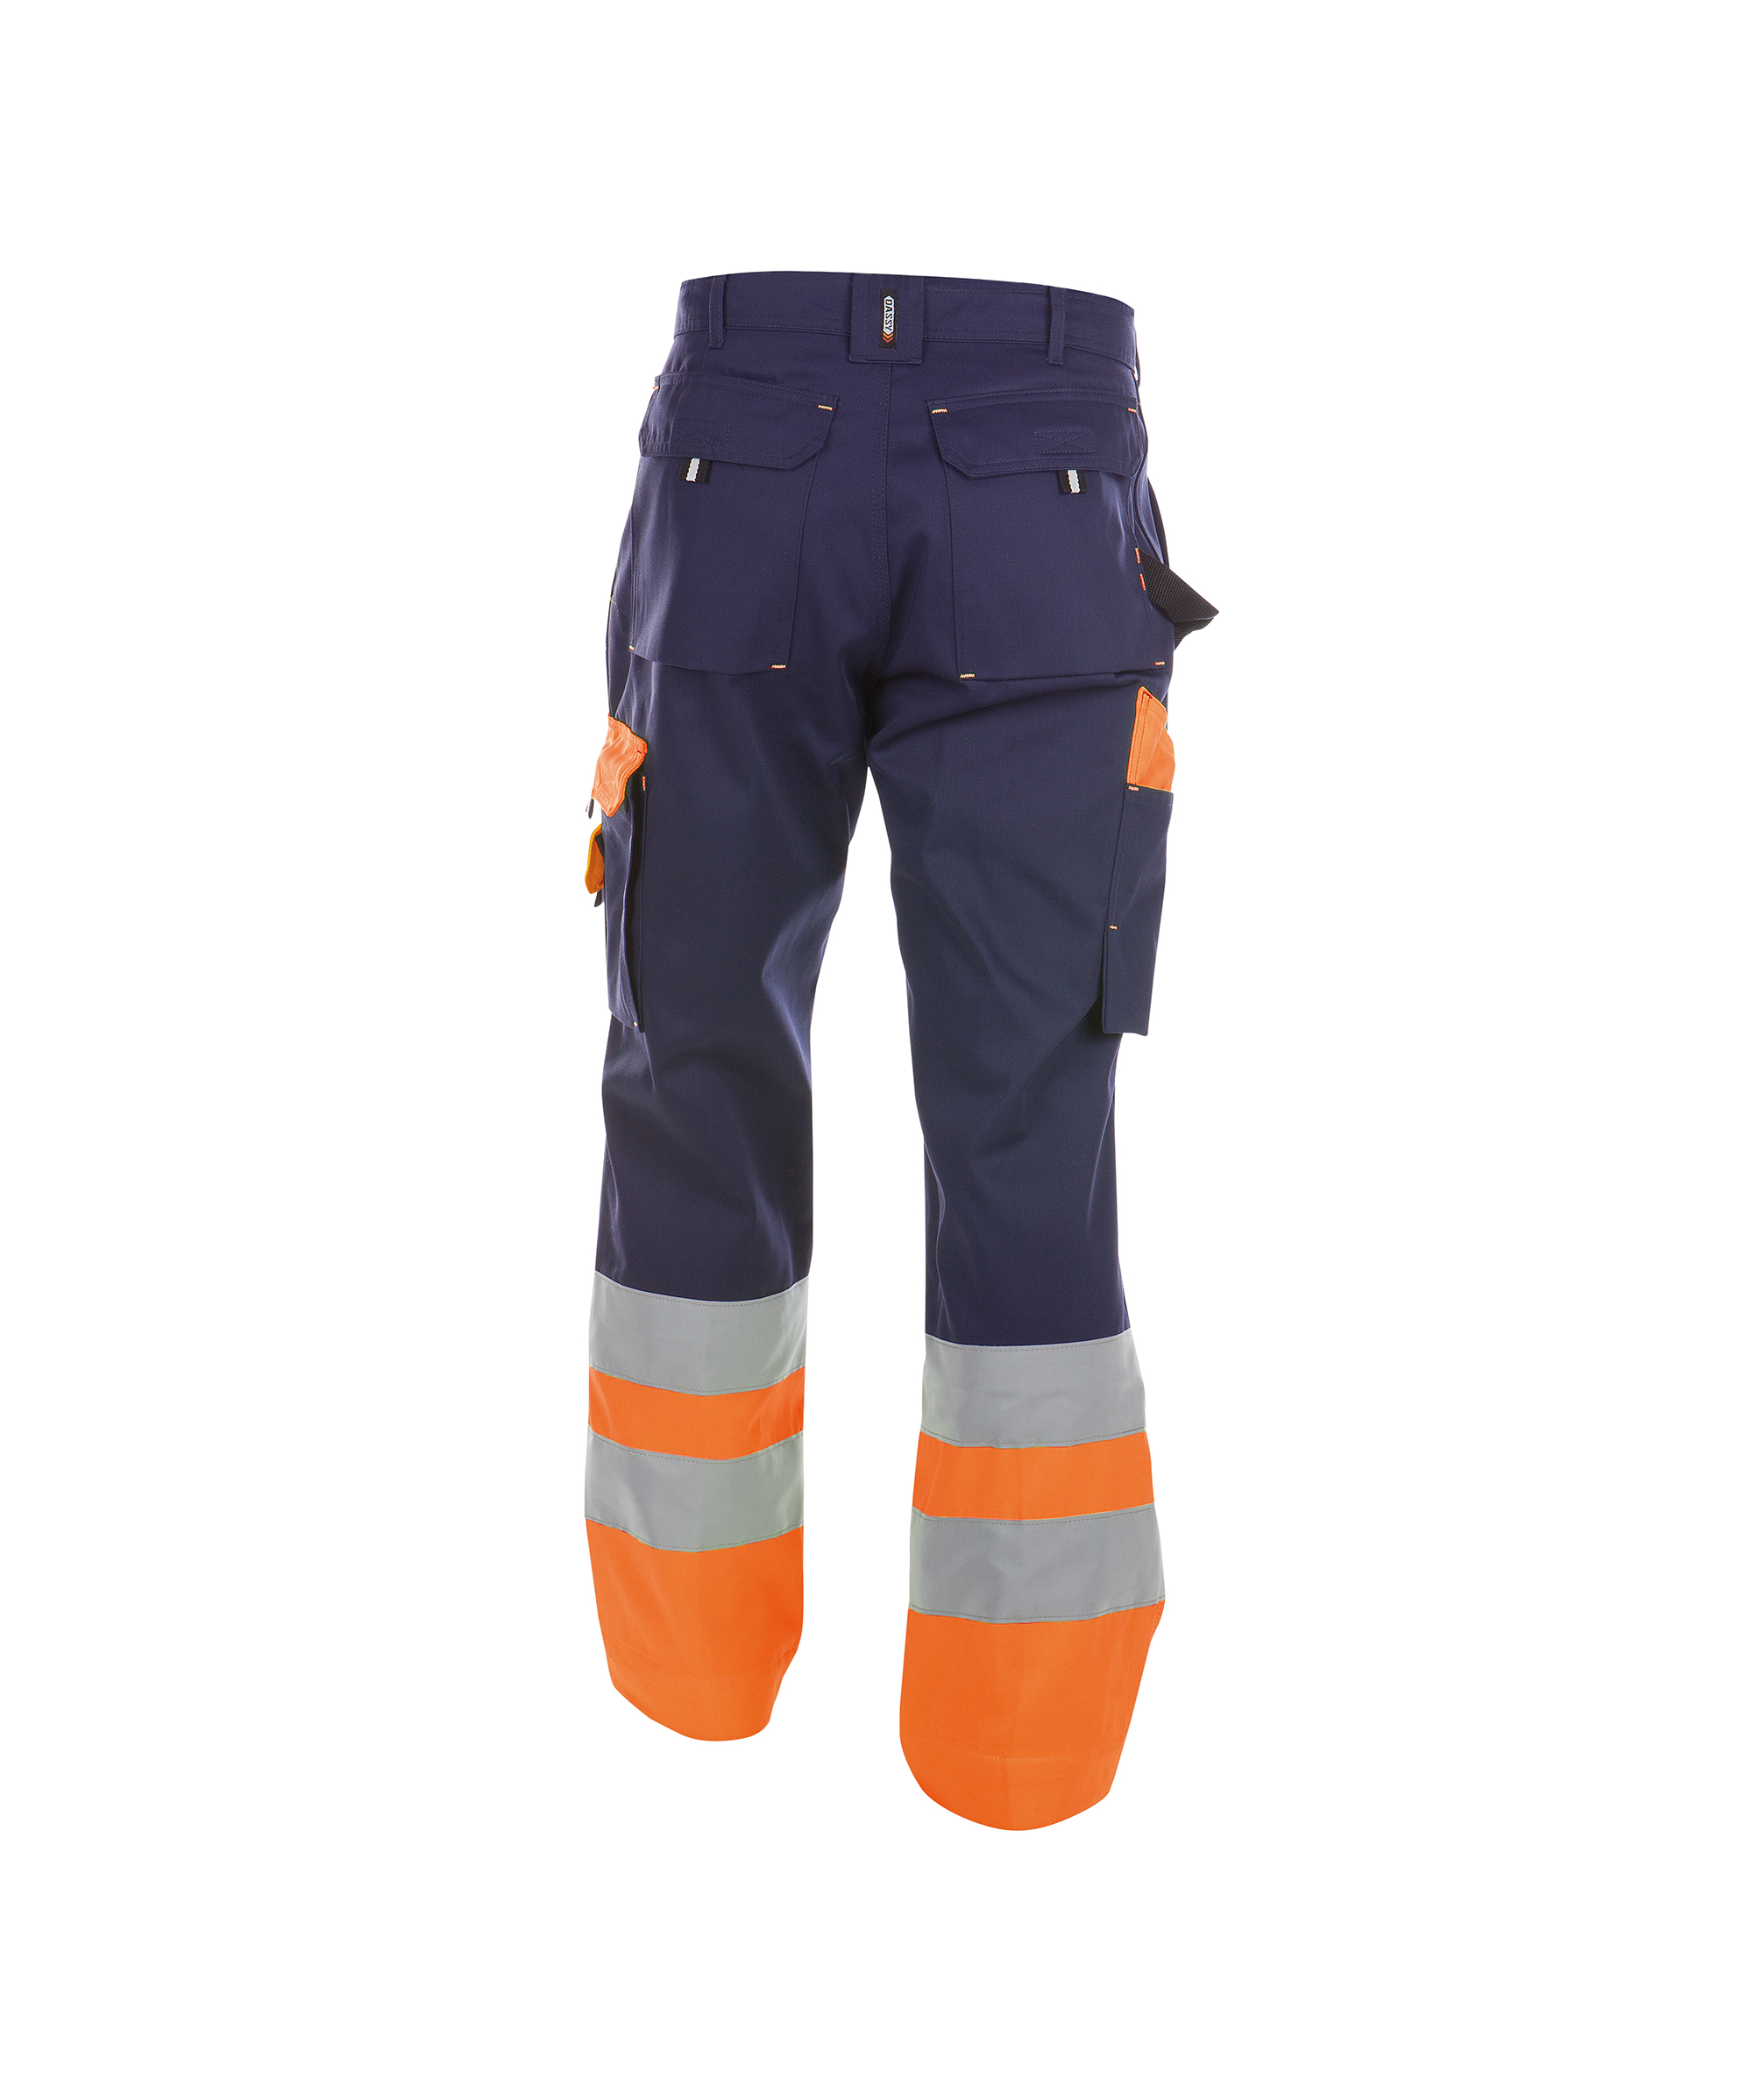 omaha_high-visibility-work-trousers_navy-fluo-orange_back.jpg